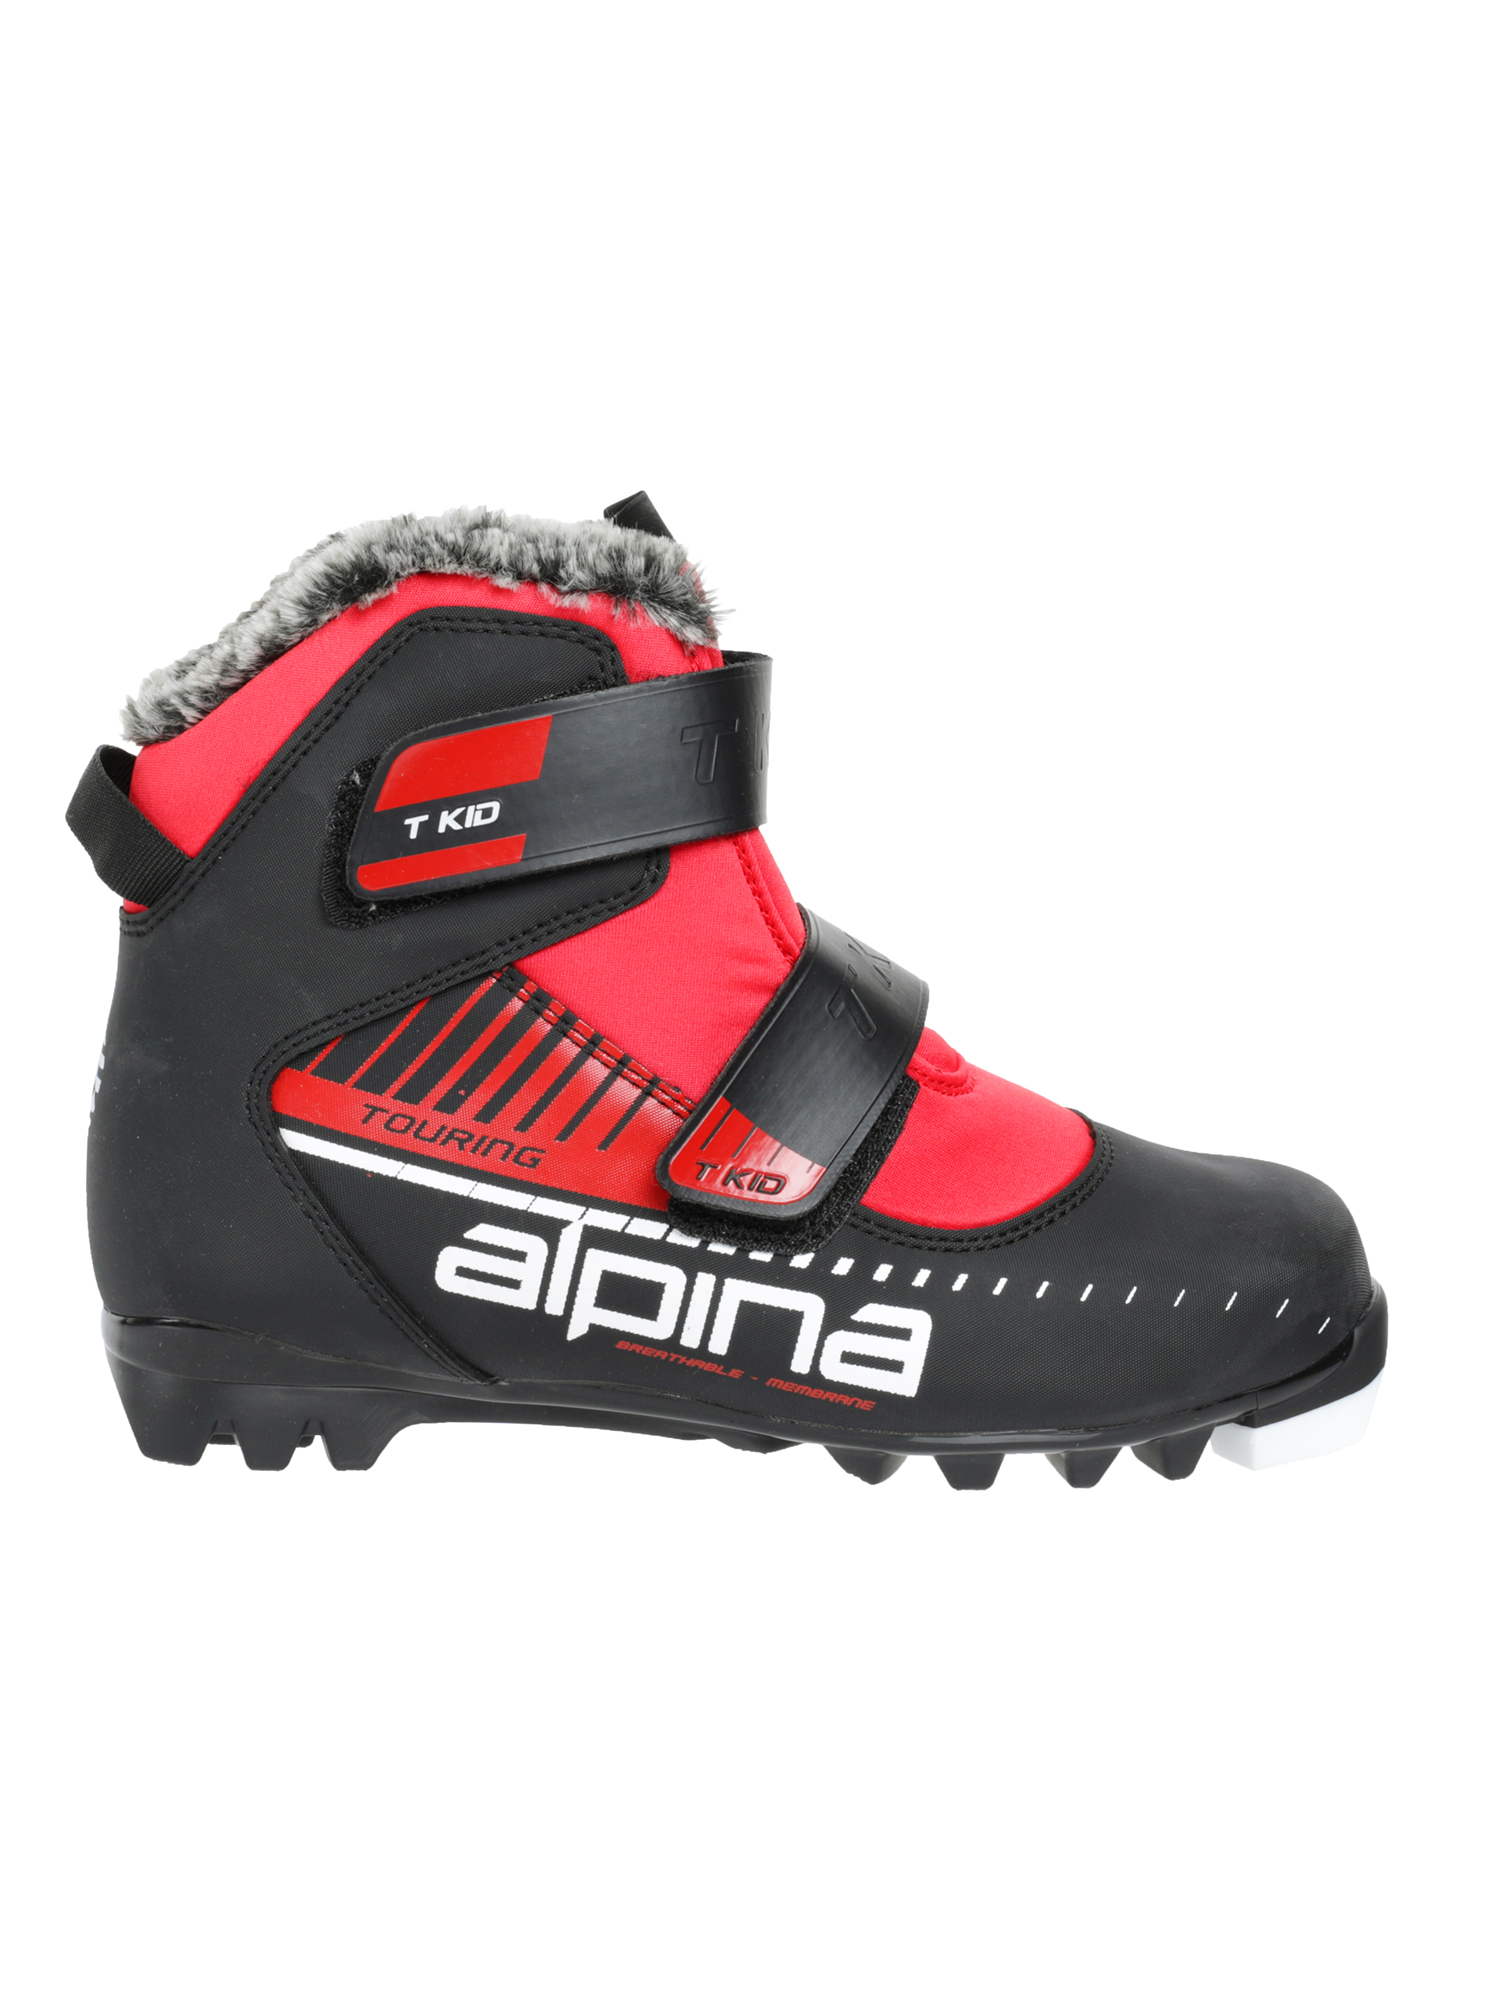 Лыжные Ботинки Детские Alpina T Kid Black/White/Red (Eur:29)